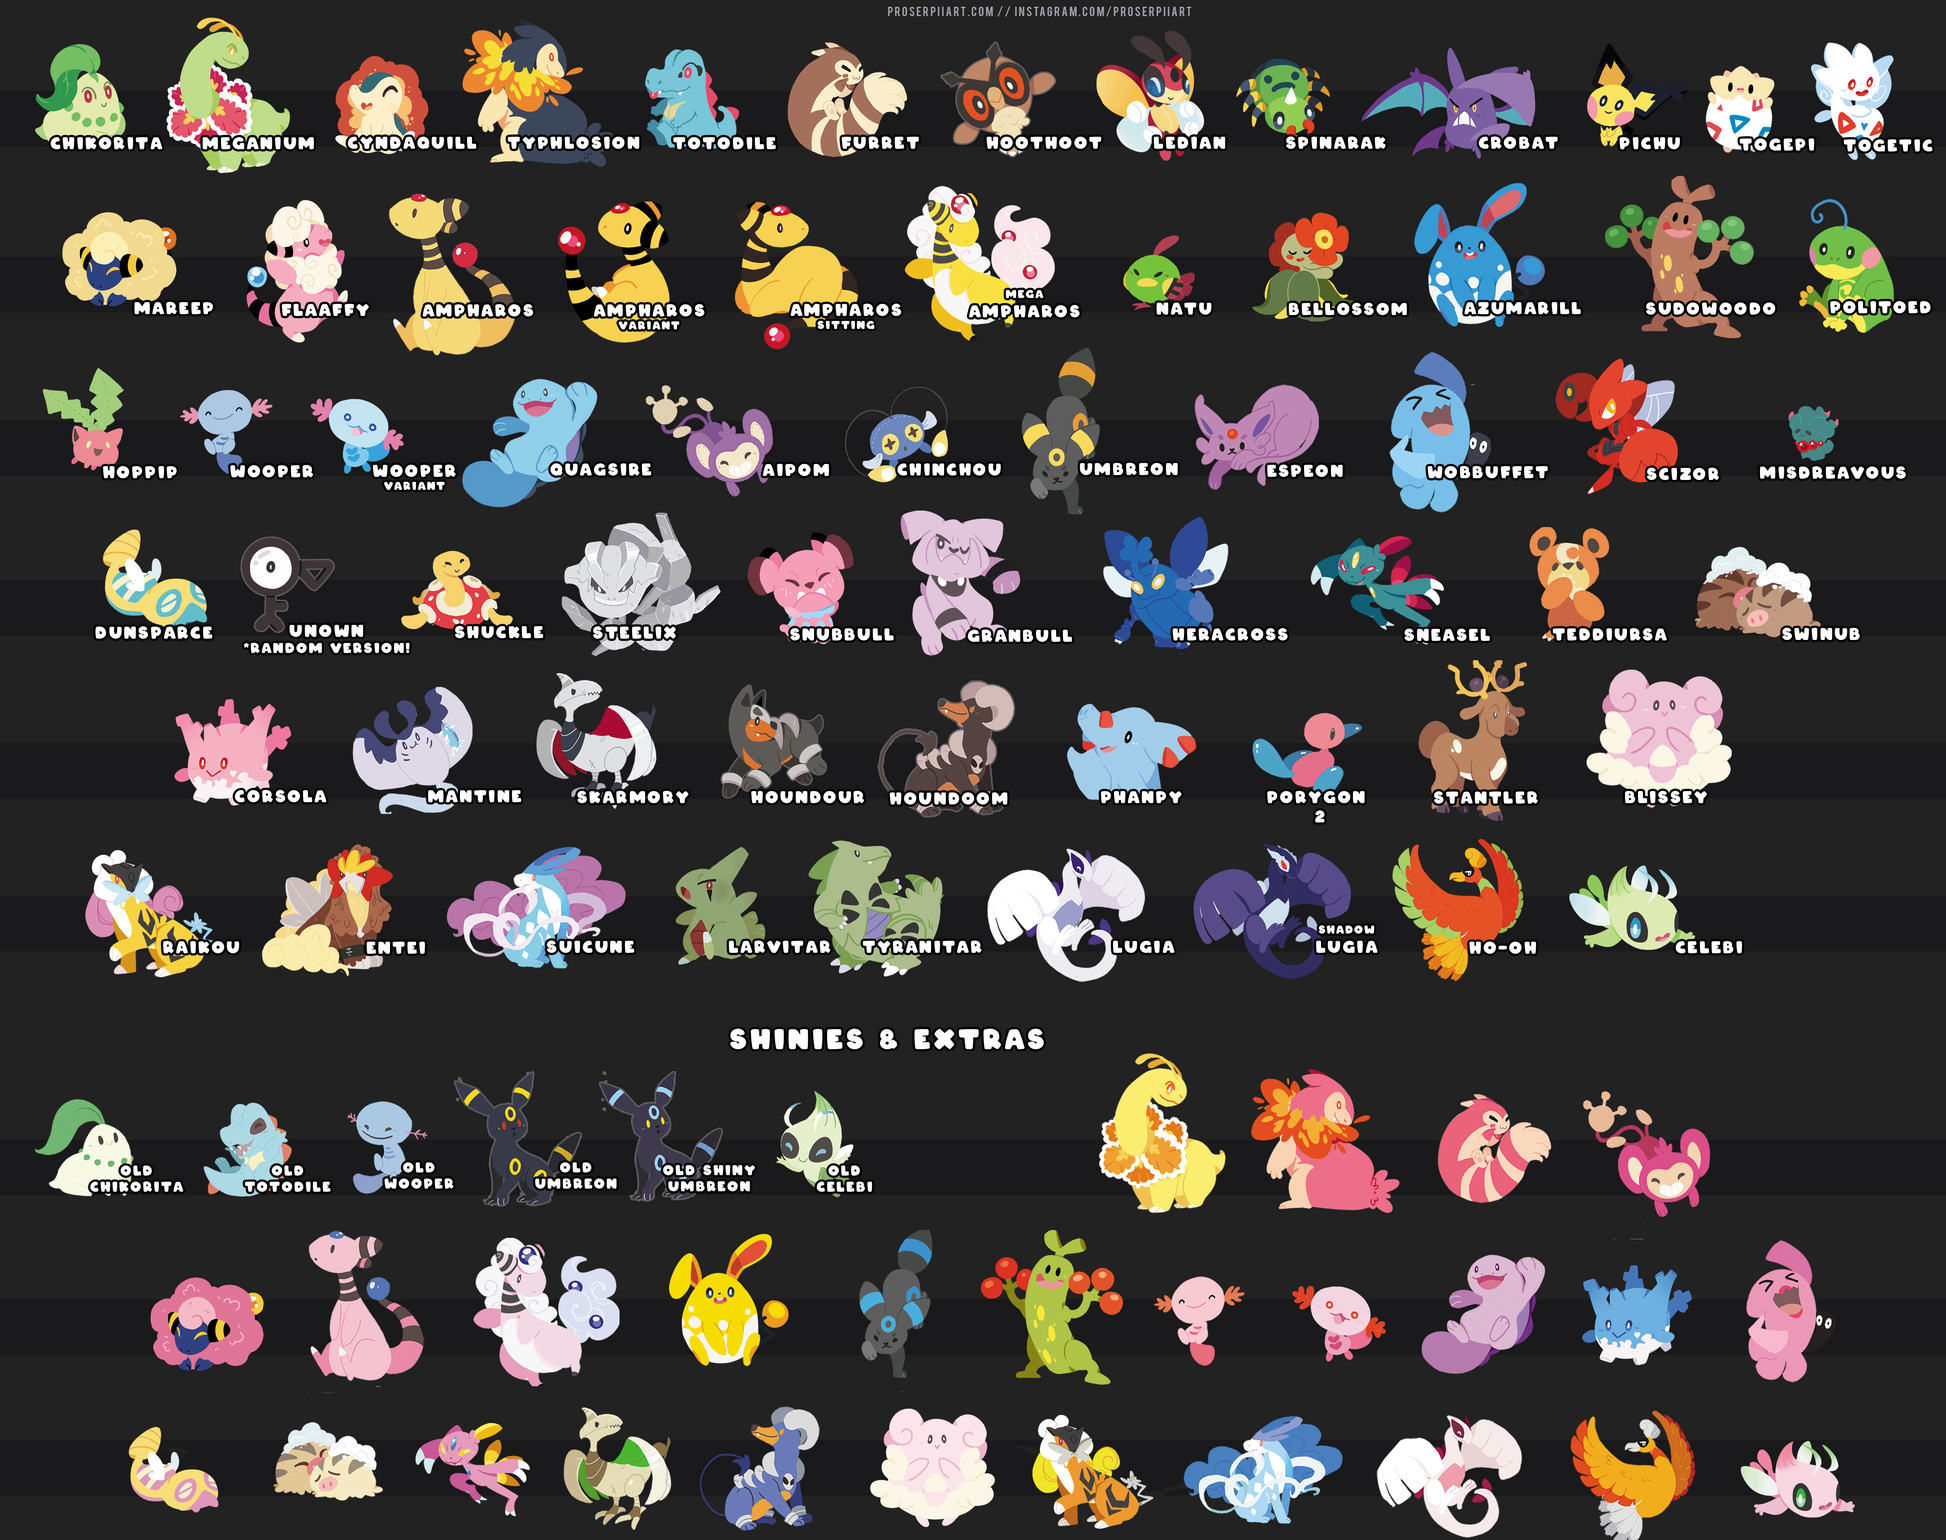 Pokemon Pick Your Own Sticker Pack – proserpiiart